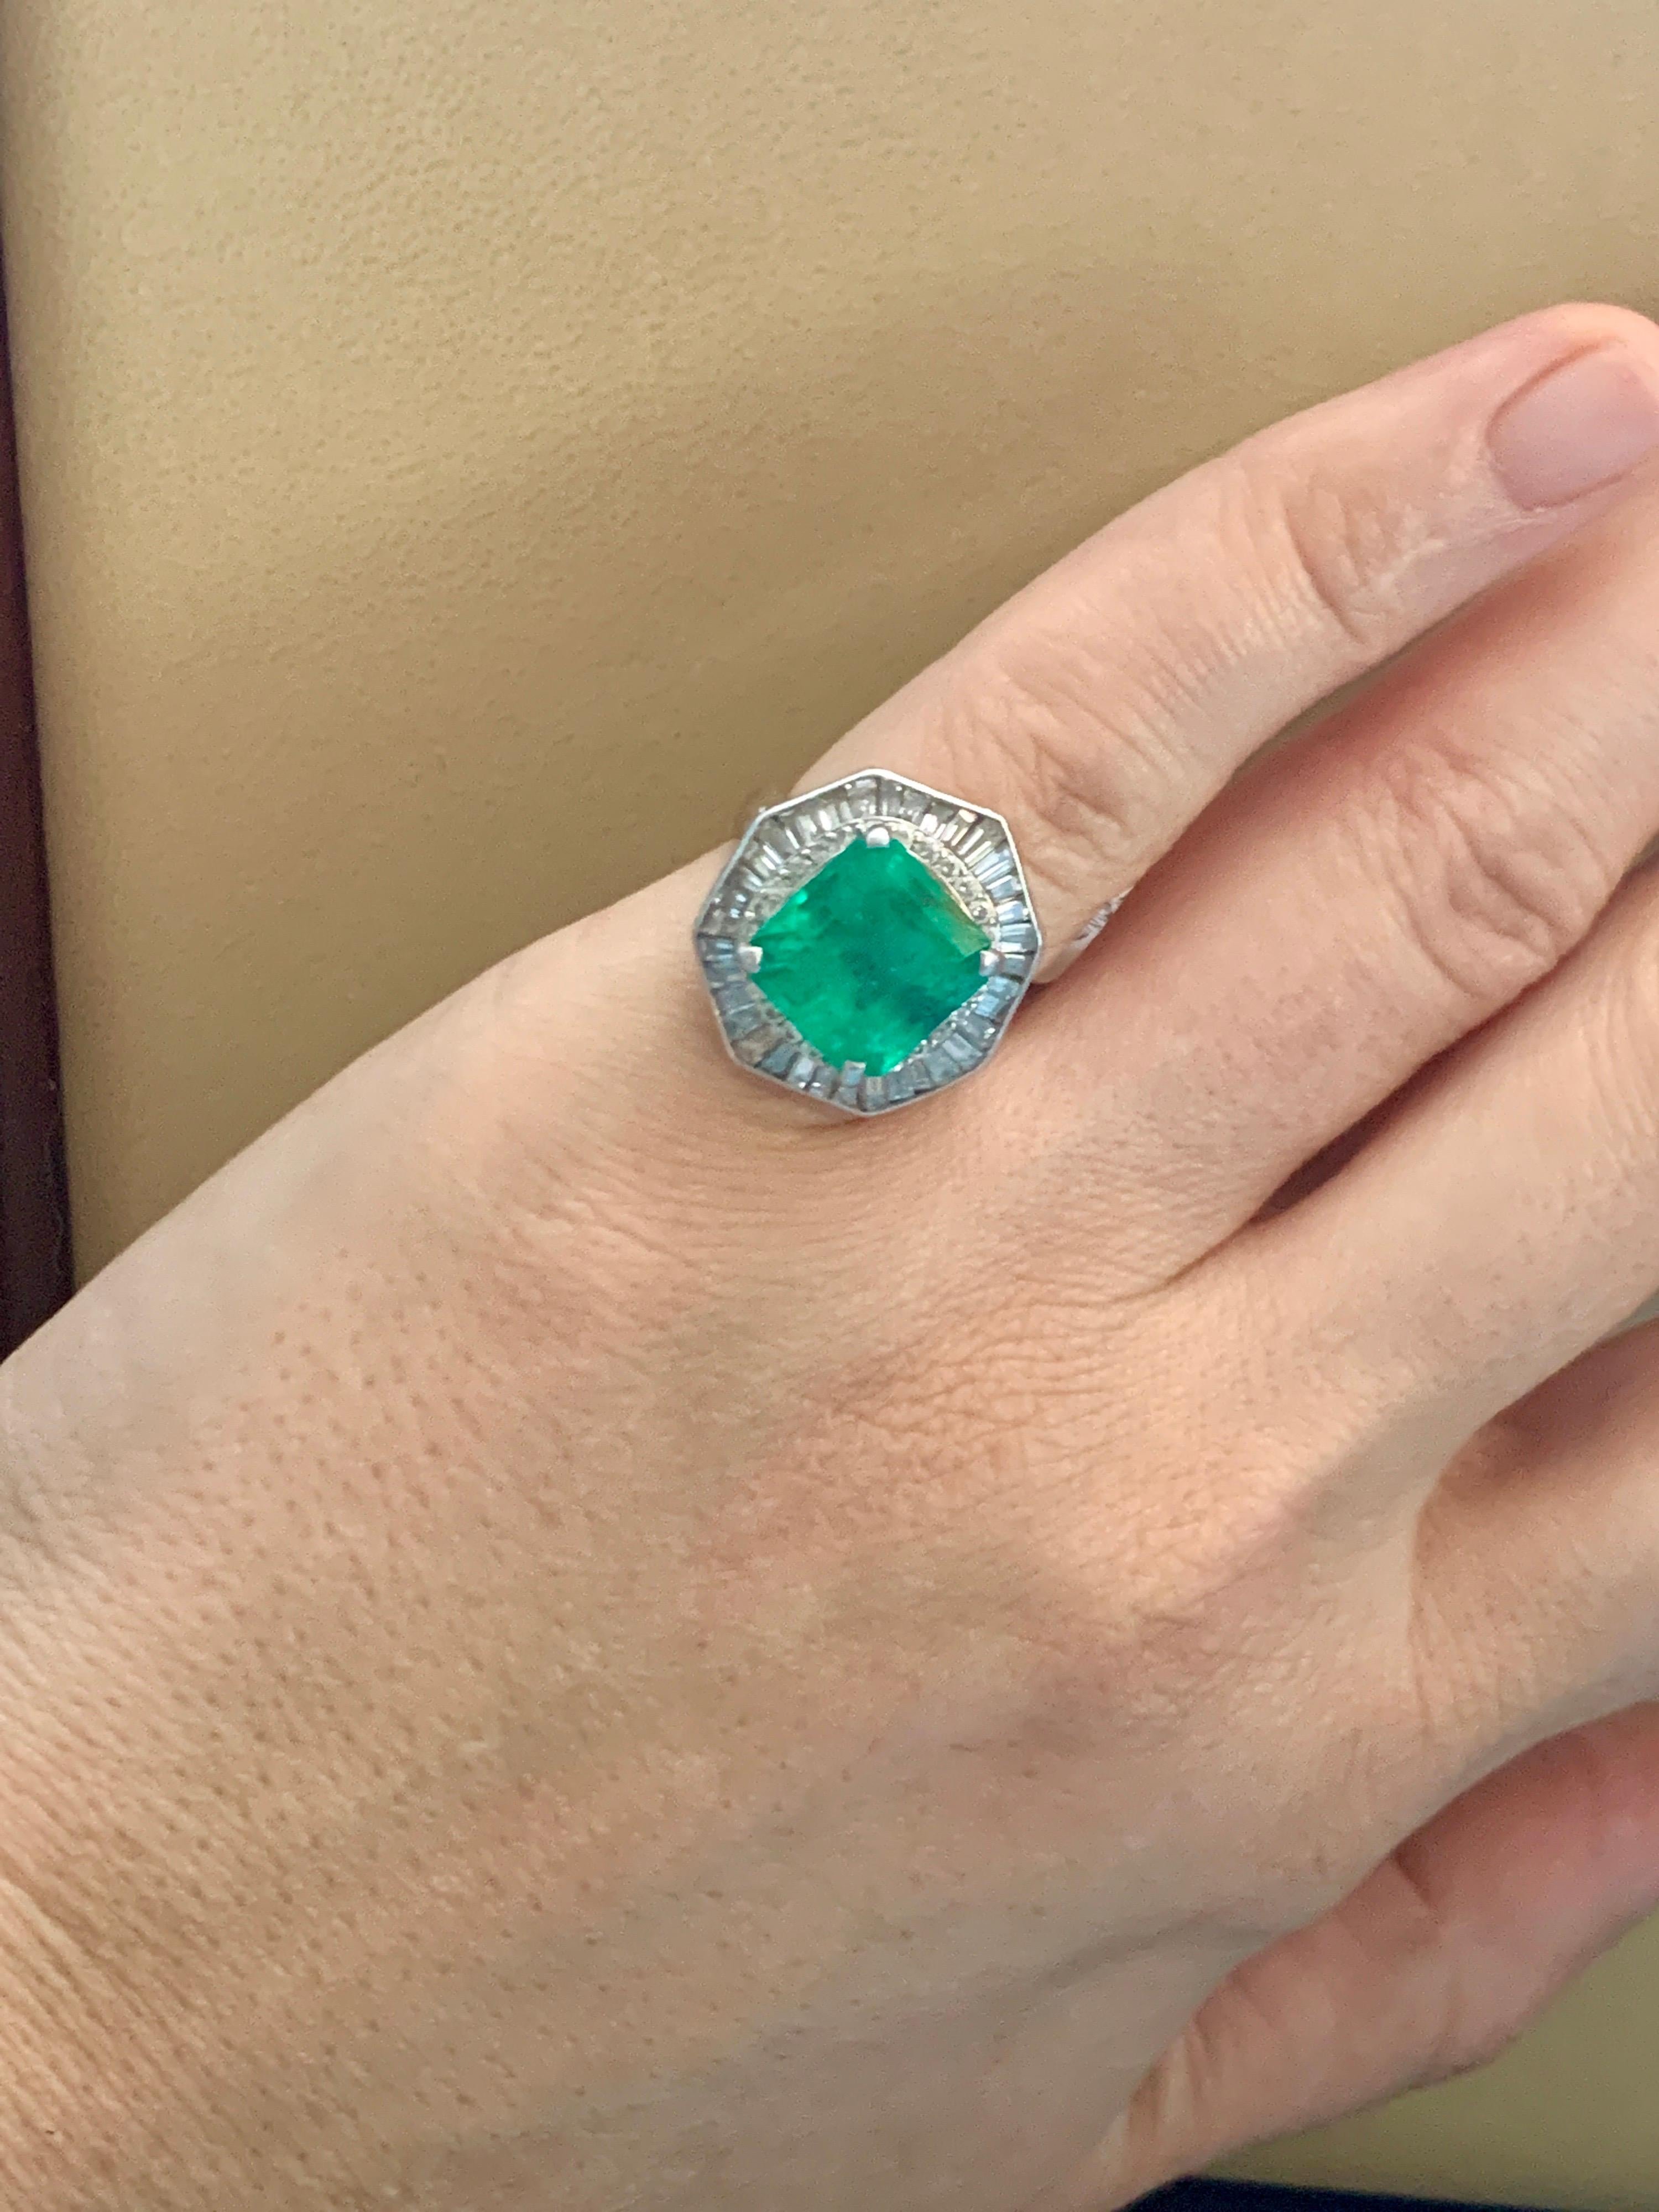 6.5 carat emerald cut diamond ring